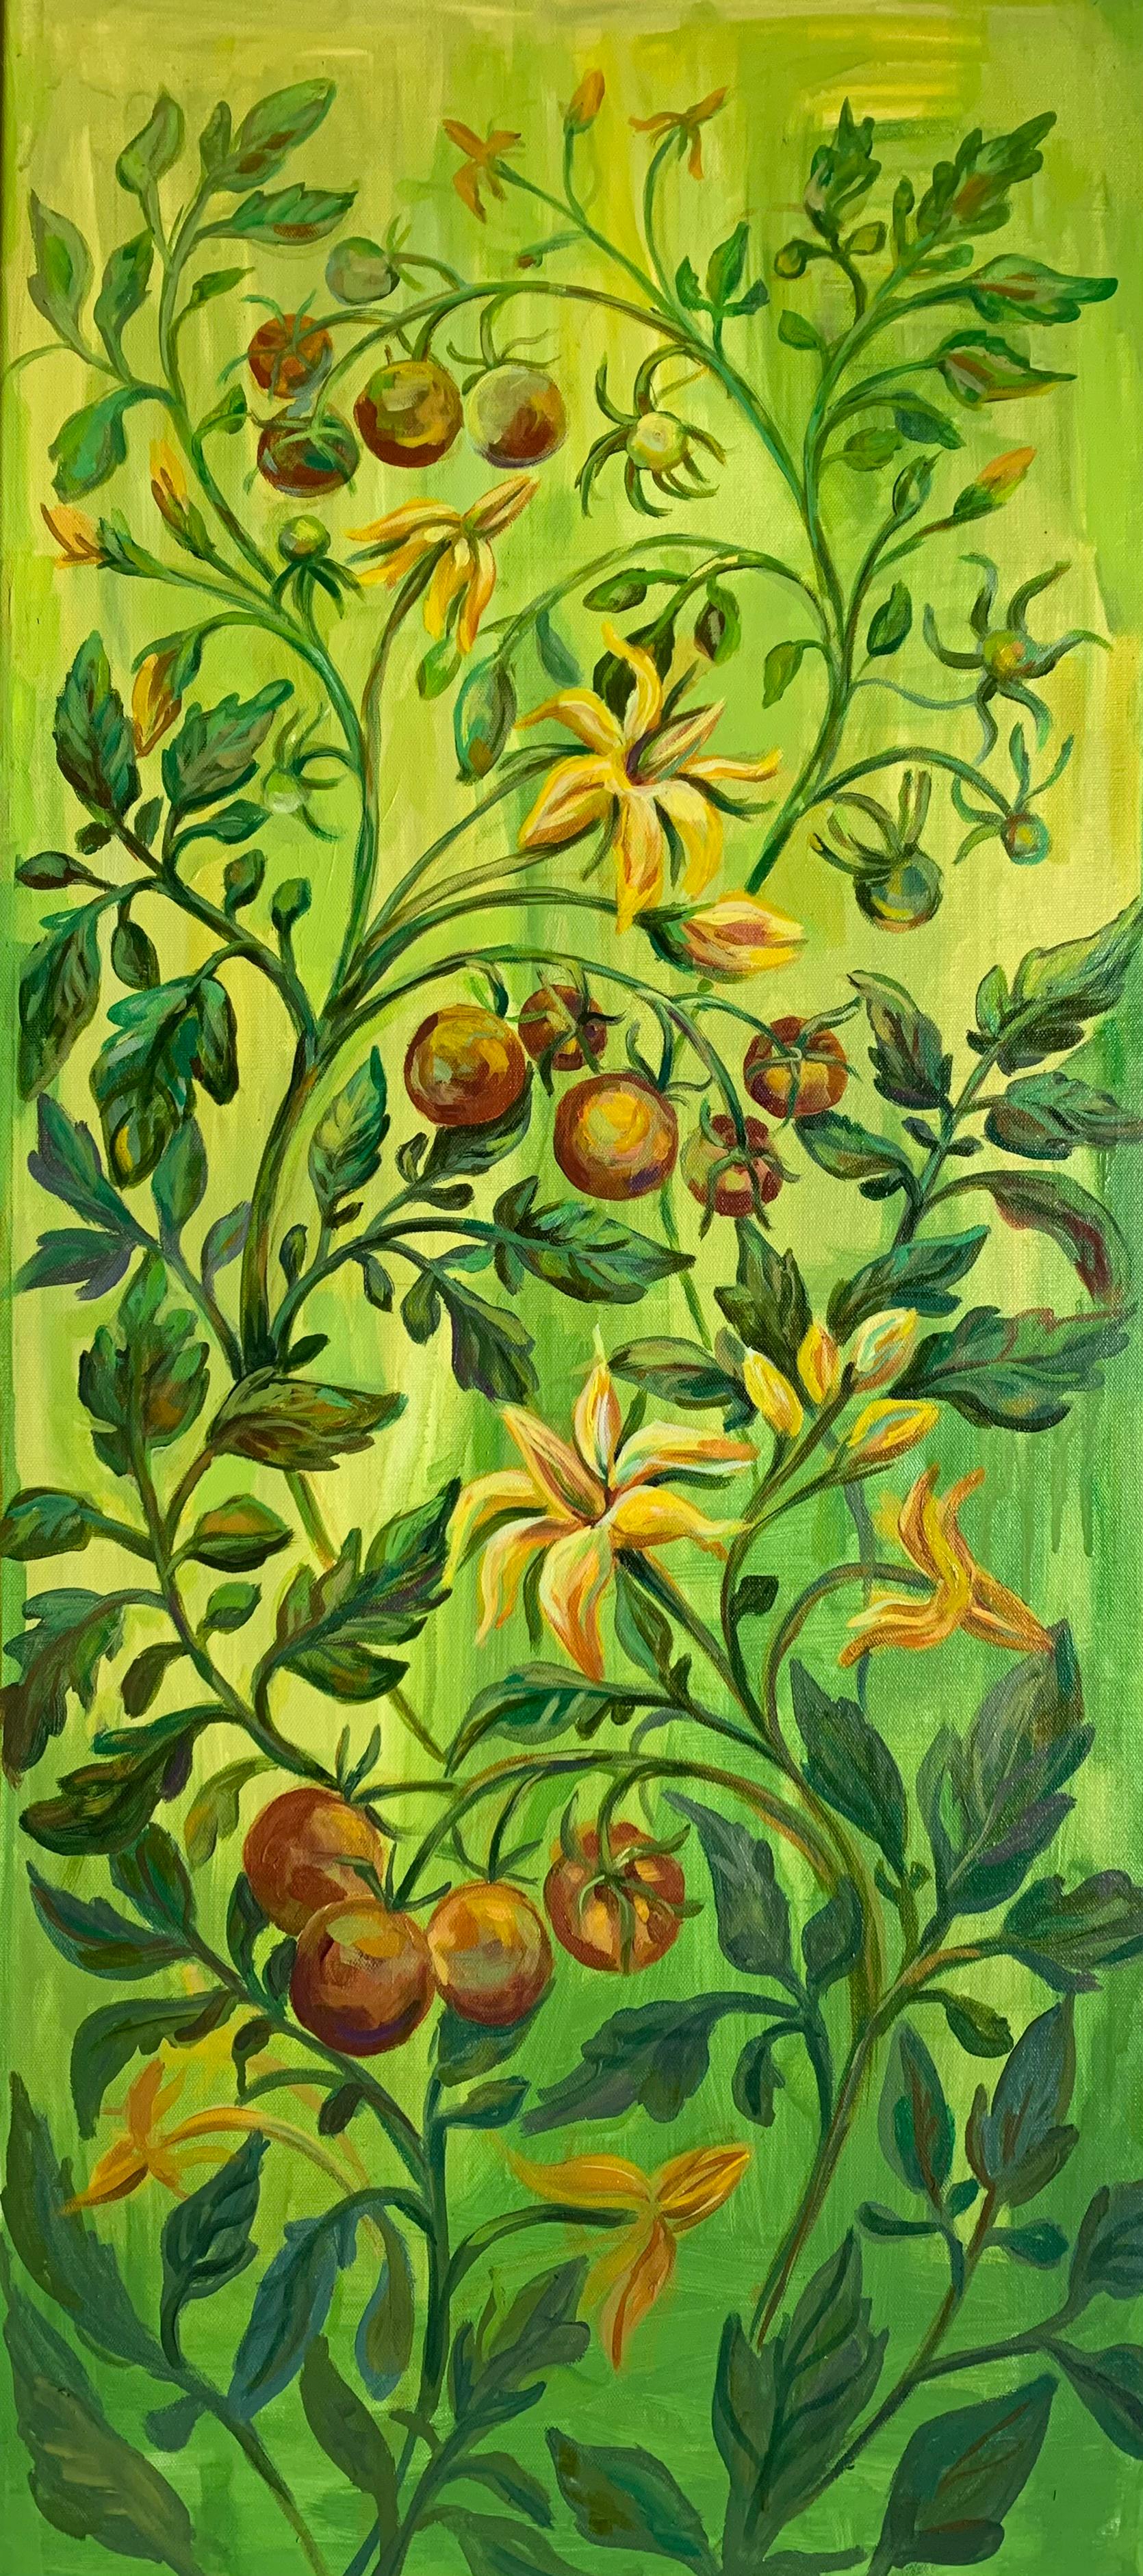 Gardener's joy Limited edition PRINT on canvas Ornament of vegetables - Art by Momalyu Liubov